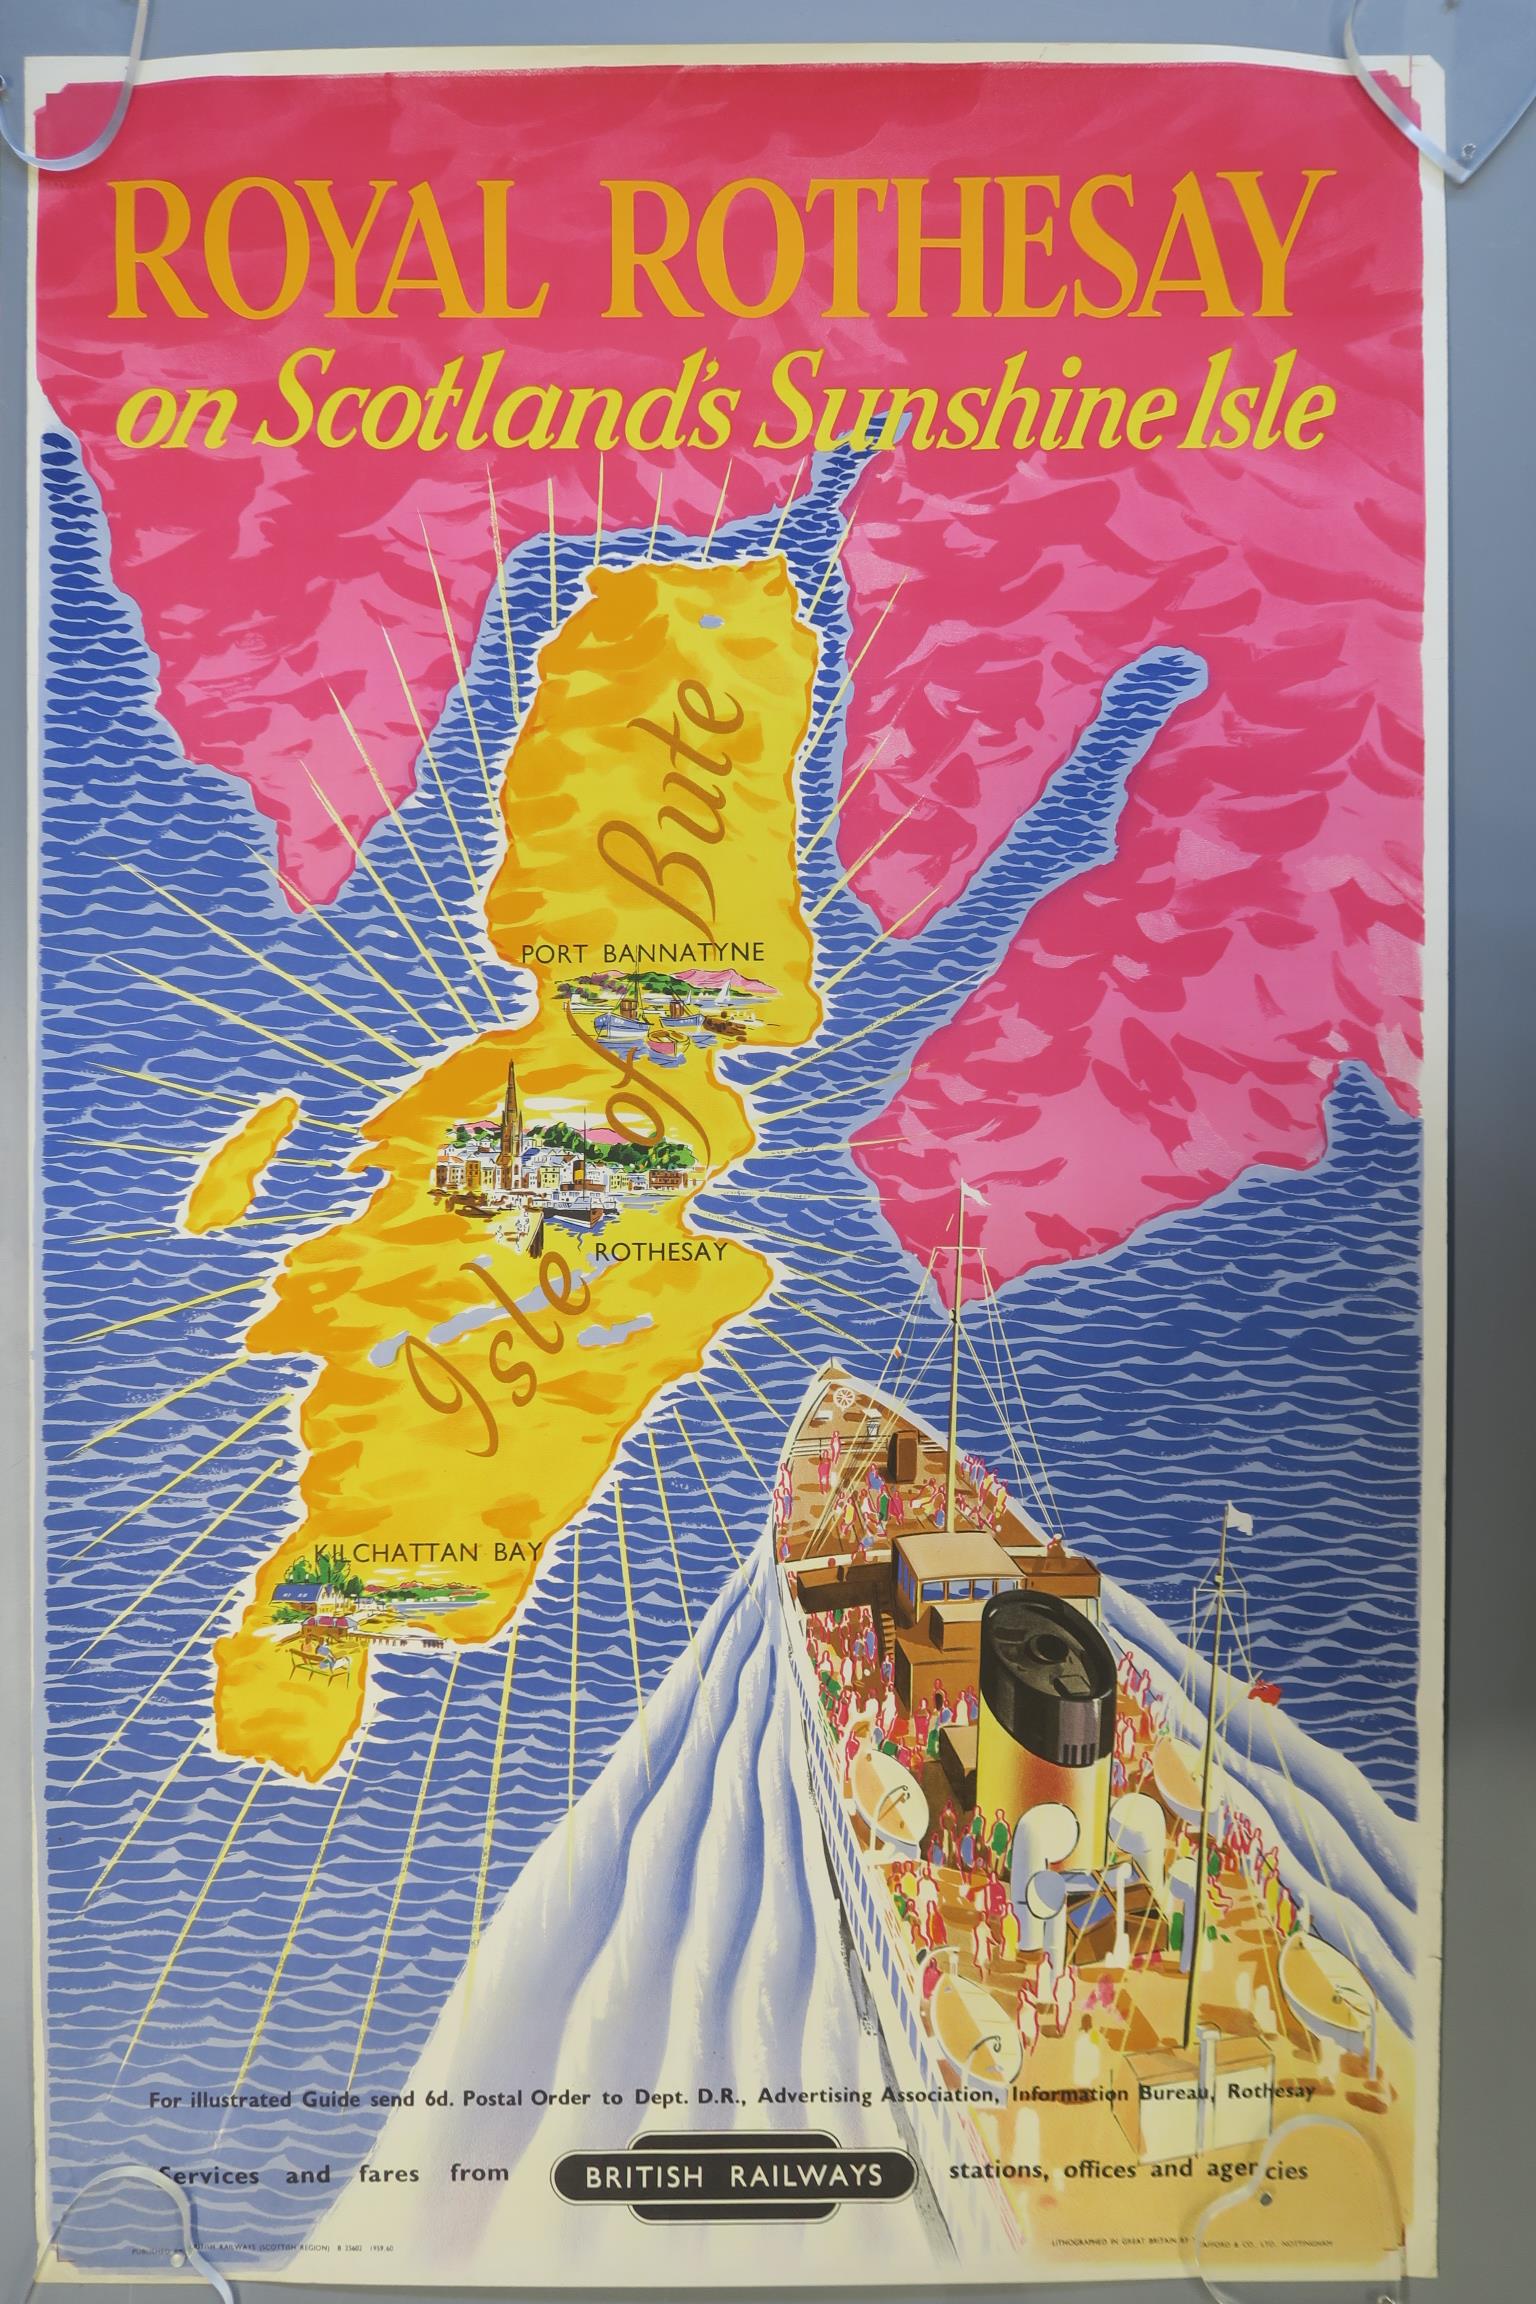 Vintage travel posters including British Railways 1959 "Royal Rothesay on Scotland's Sunshine Isle"